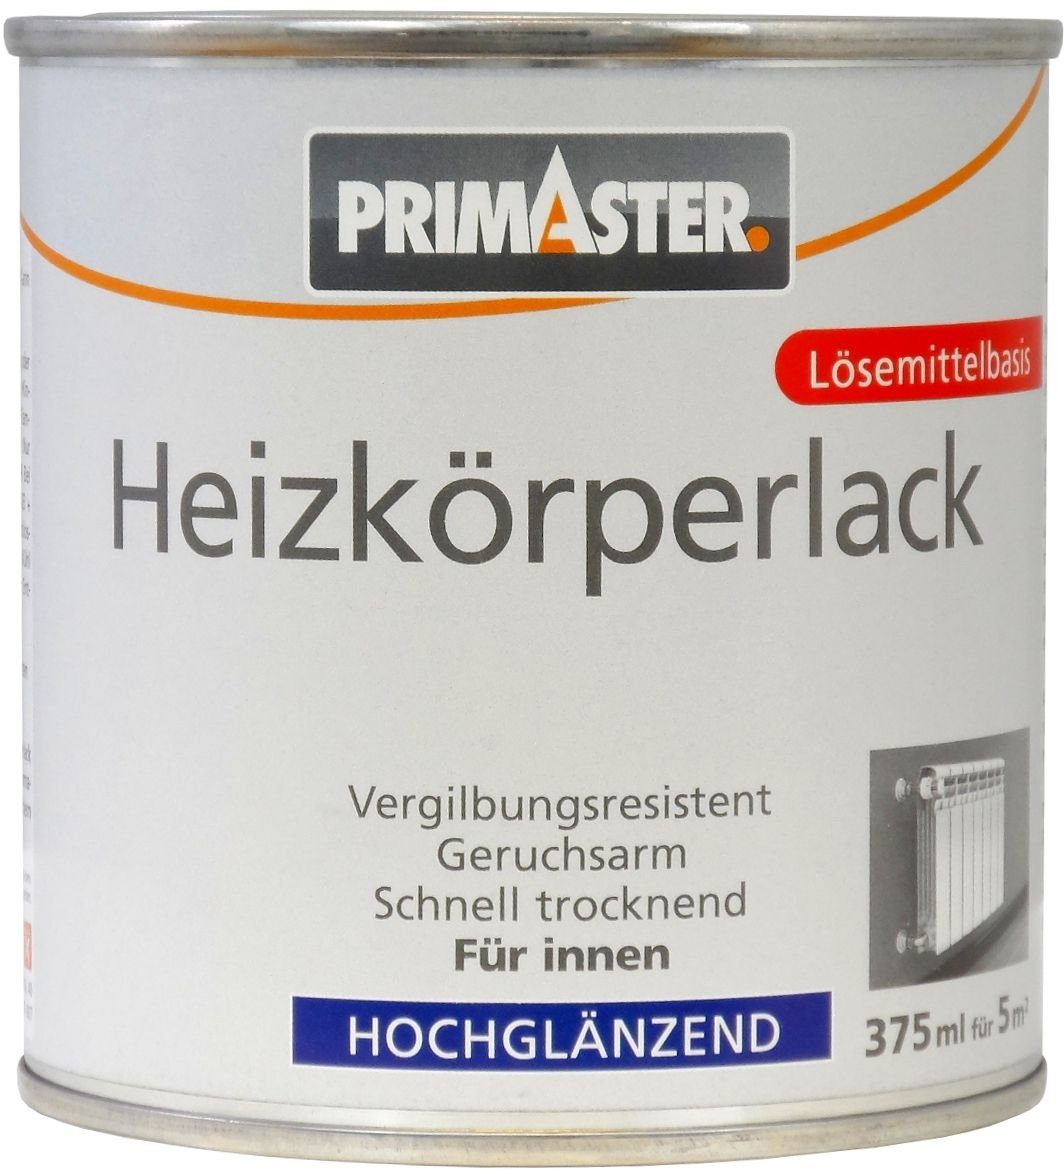 Primaster Heizkörperlack Primaster ml 375 weiß Heizkörperlack hochglänzend